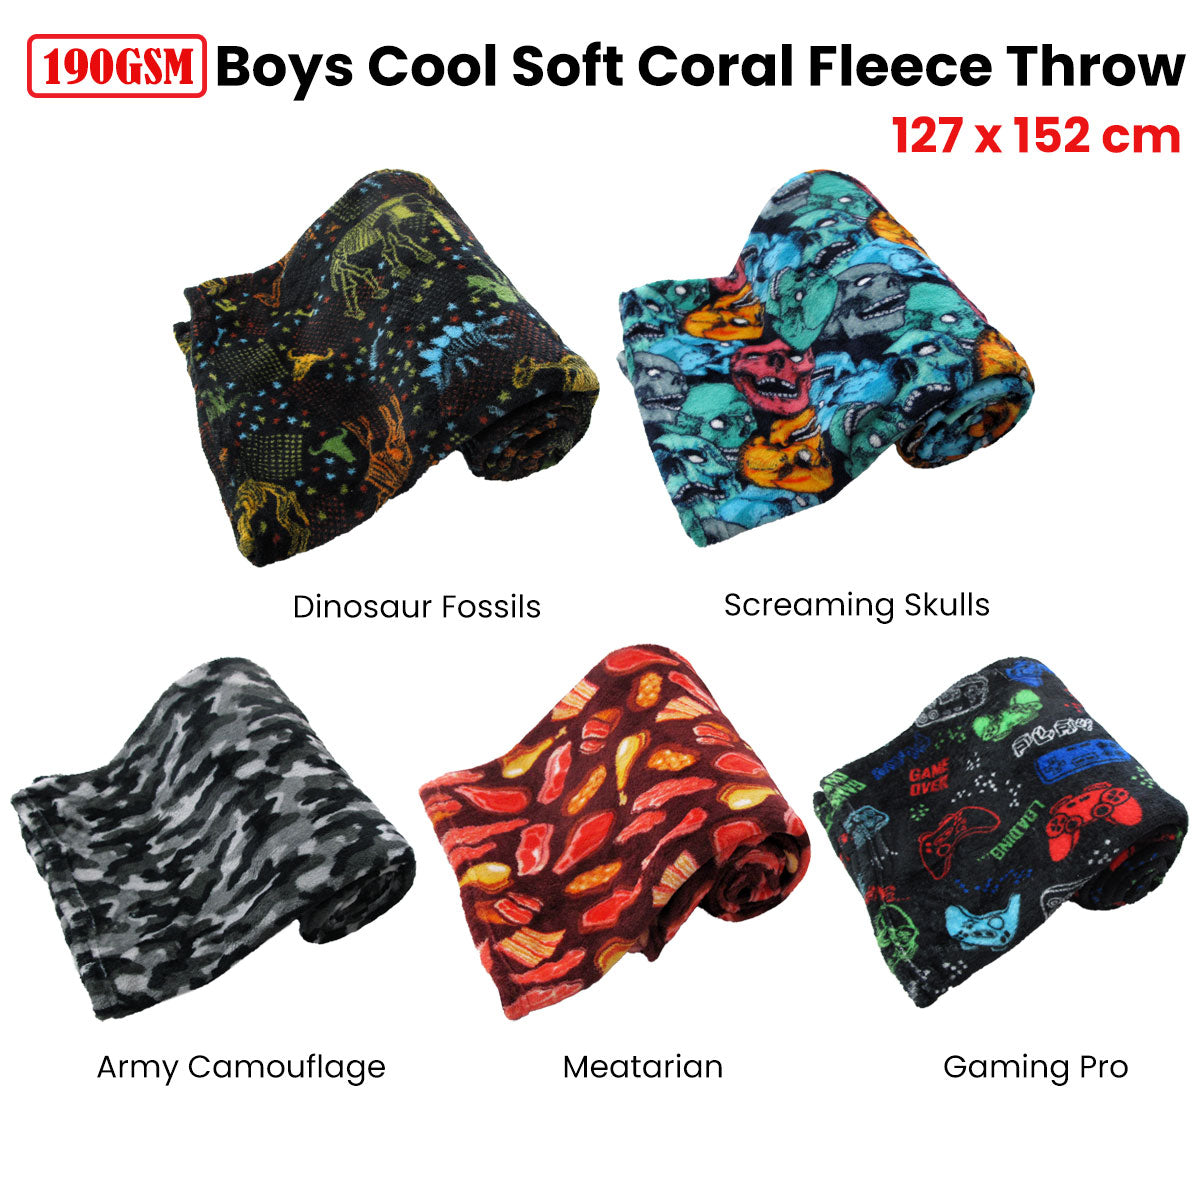 190GSM Boys Cool Ultra Soft Coral Fleece Throw 127 x 152cm Dinosaur Fossils